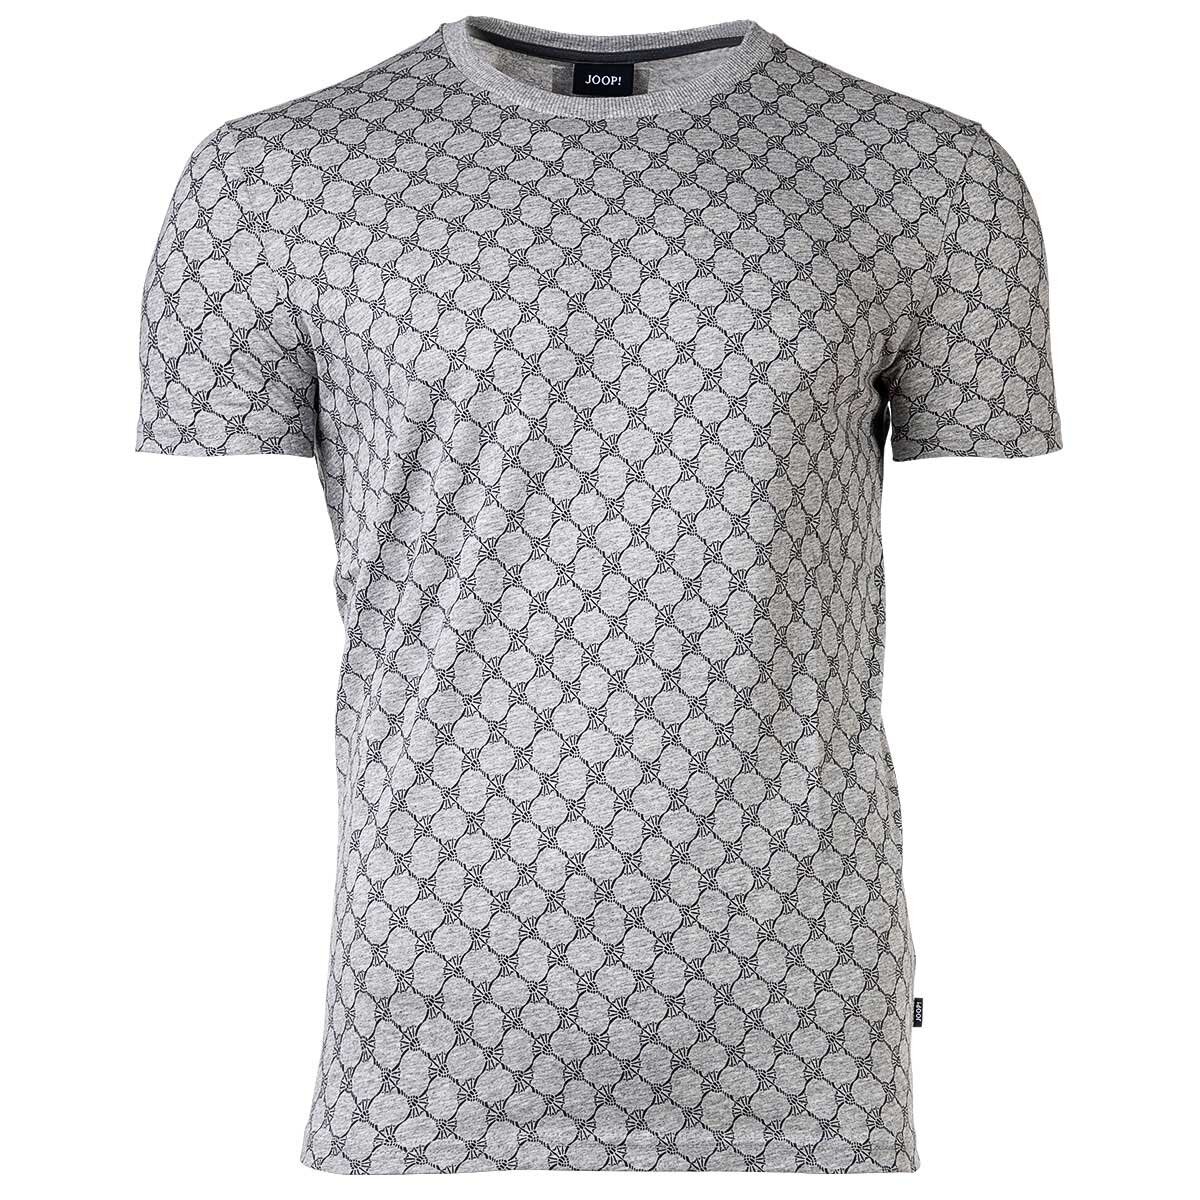 JOOP! men's loungewear T-shirt - cotton jersey, 59,95 €